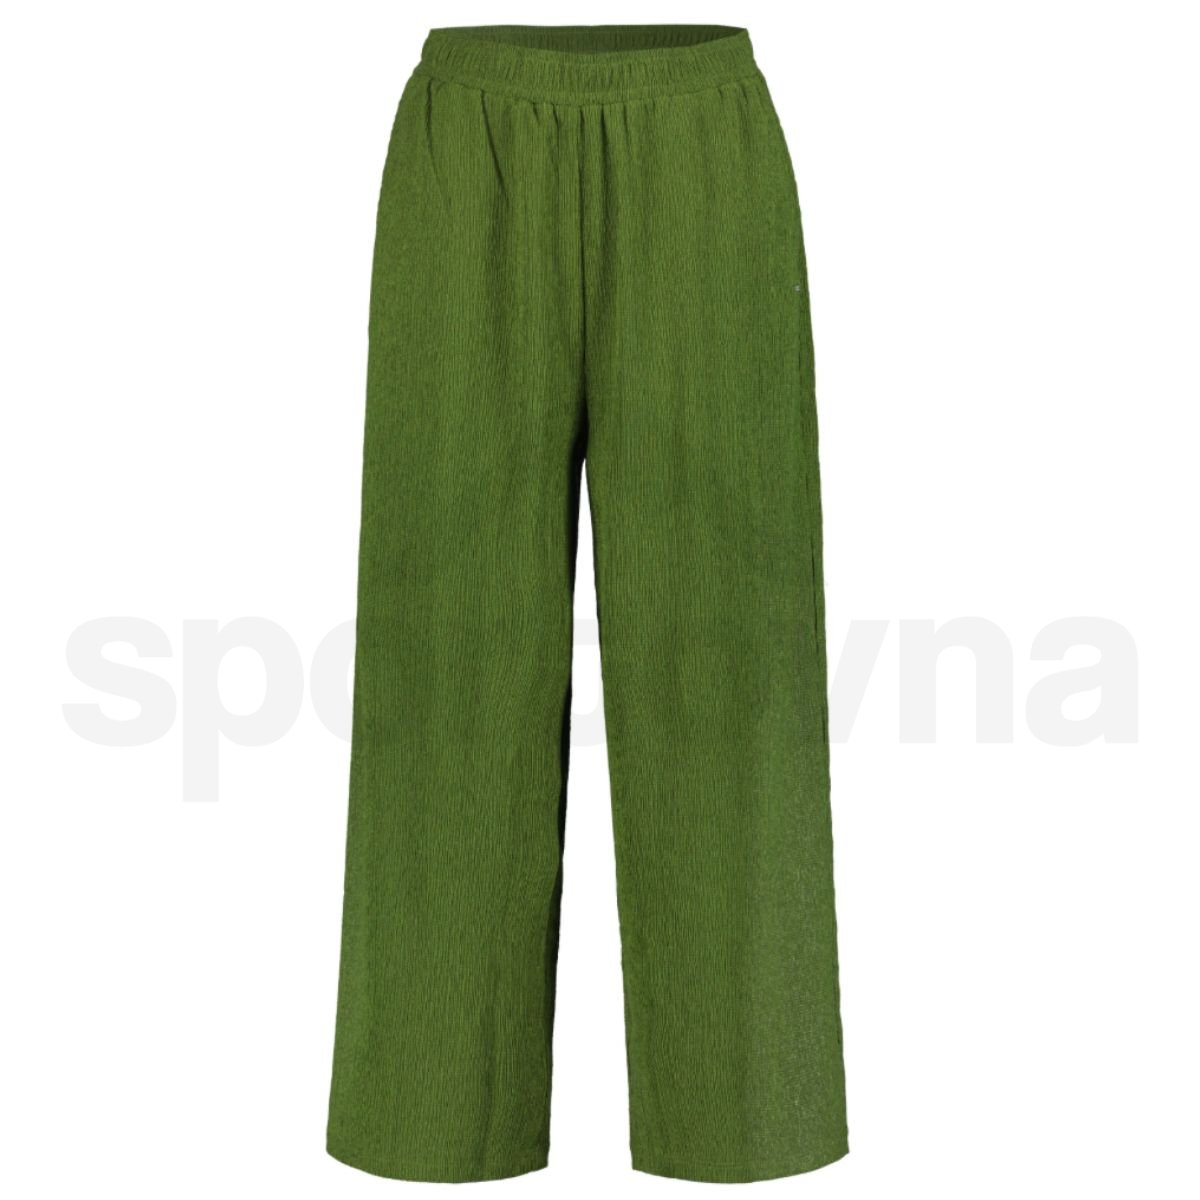 Kalhoty Luhta Haiko W - zelená